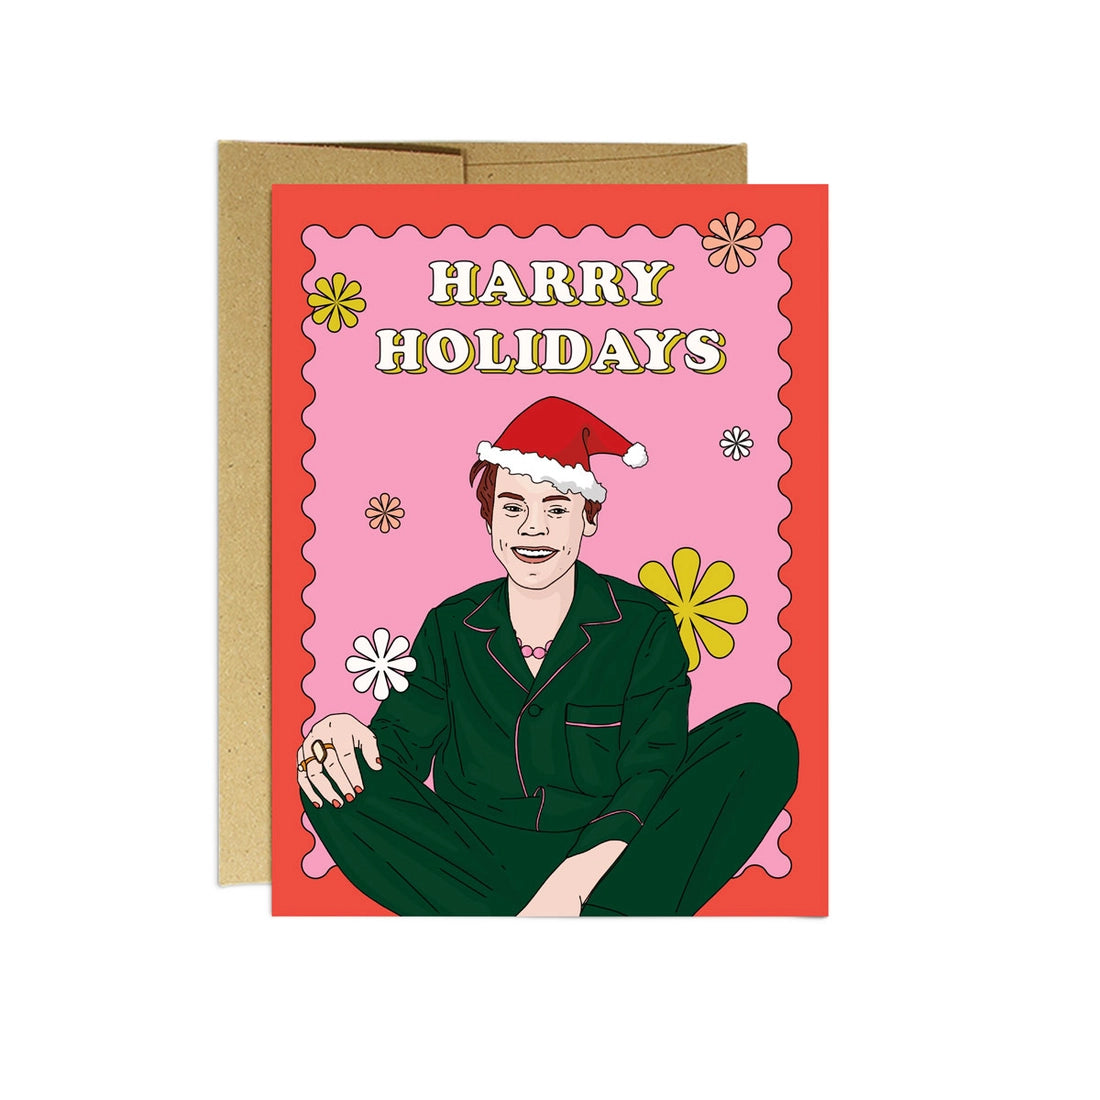 Harry Holidays - Greeting Card